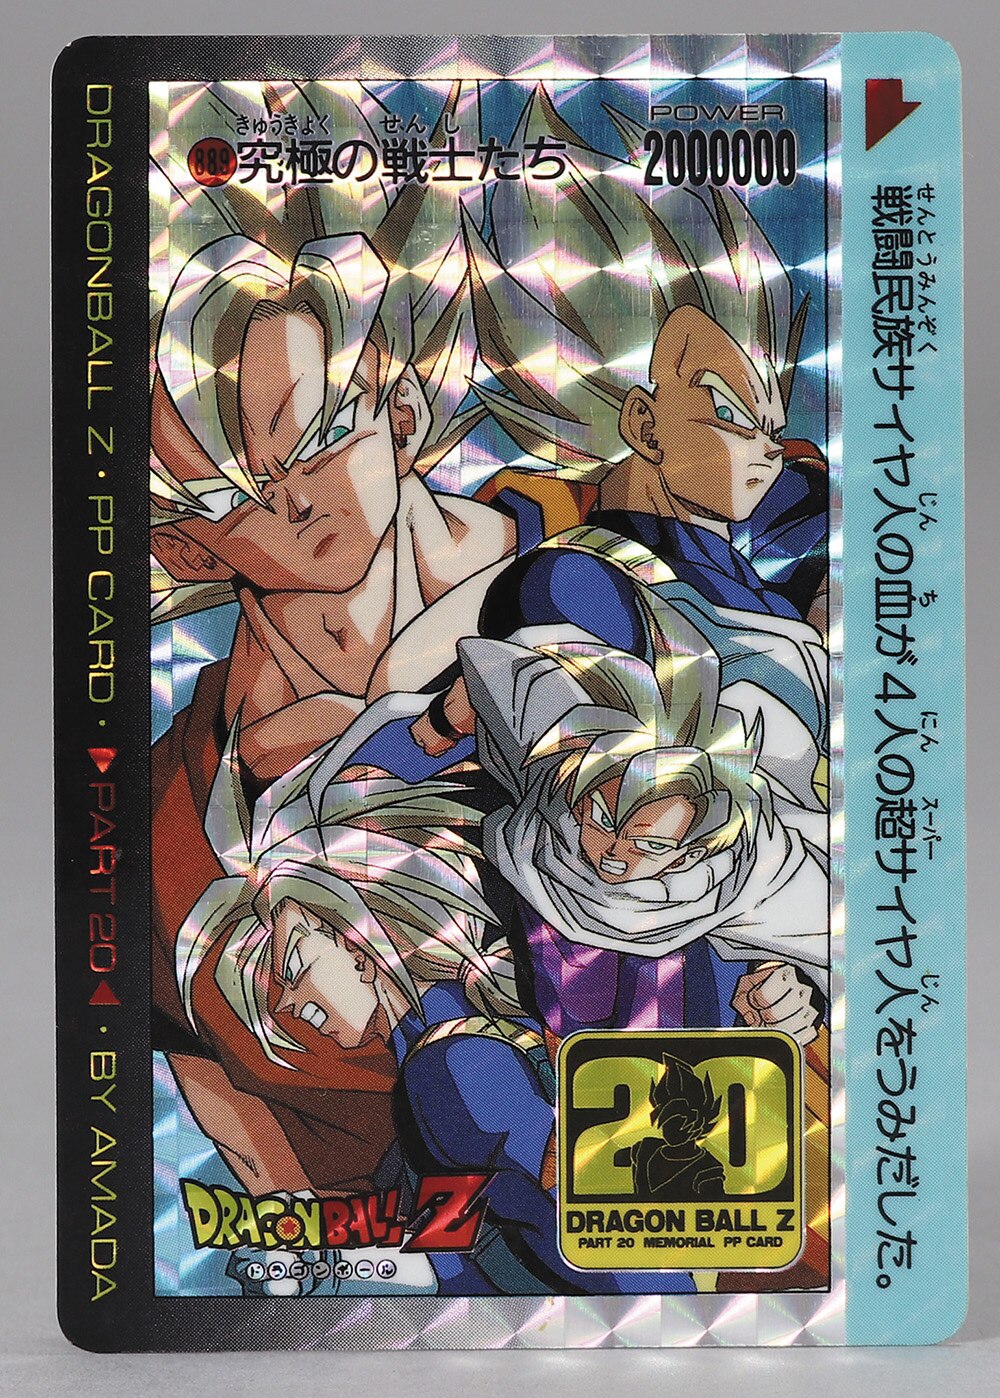 Dragon ball z dbz amada pp part 22 regular card reg card 942 made in japan ** 